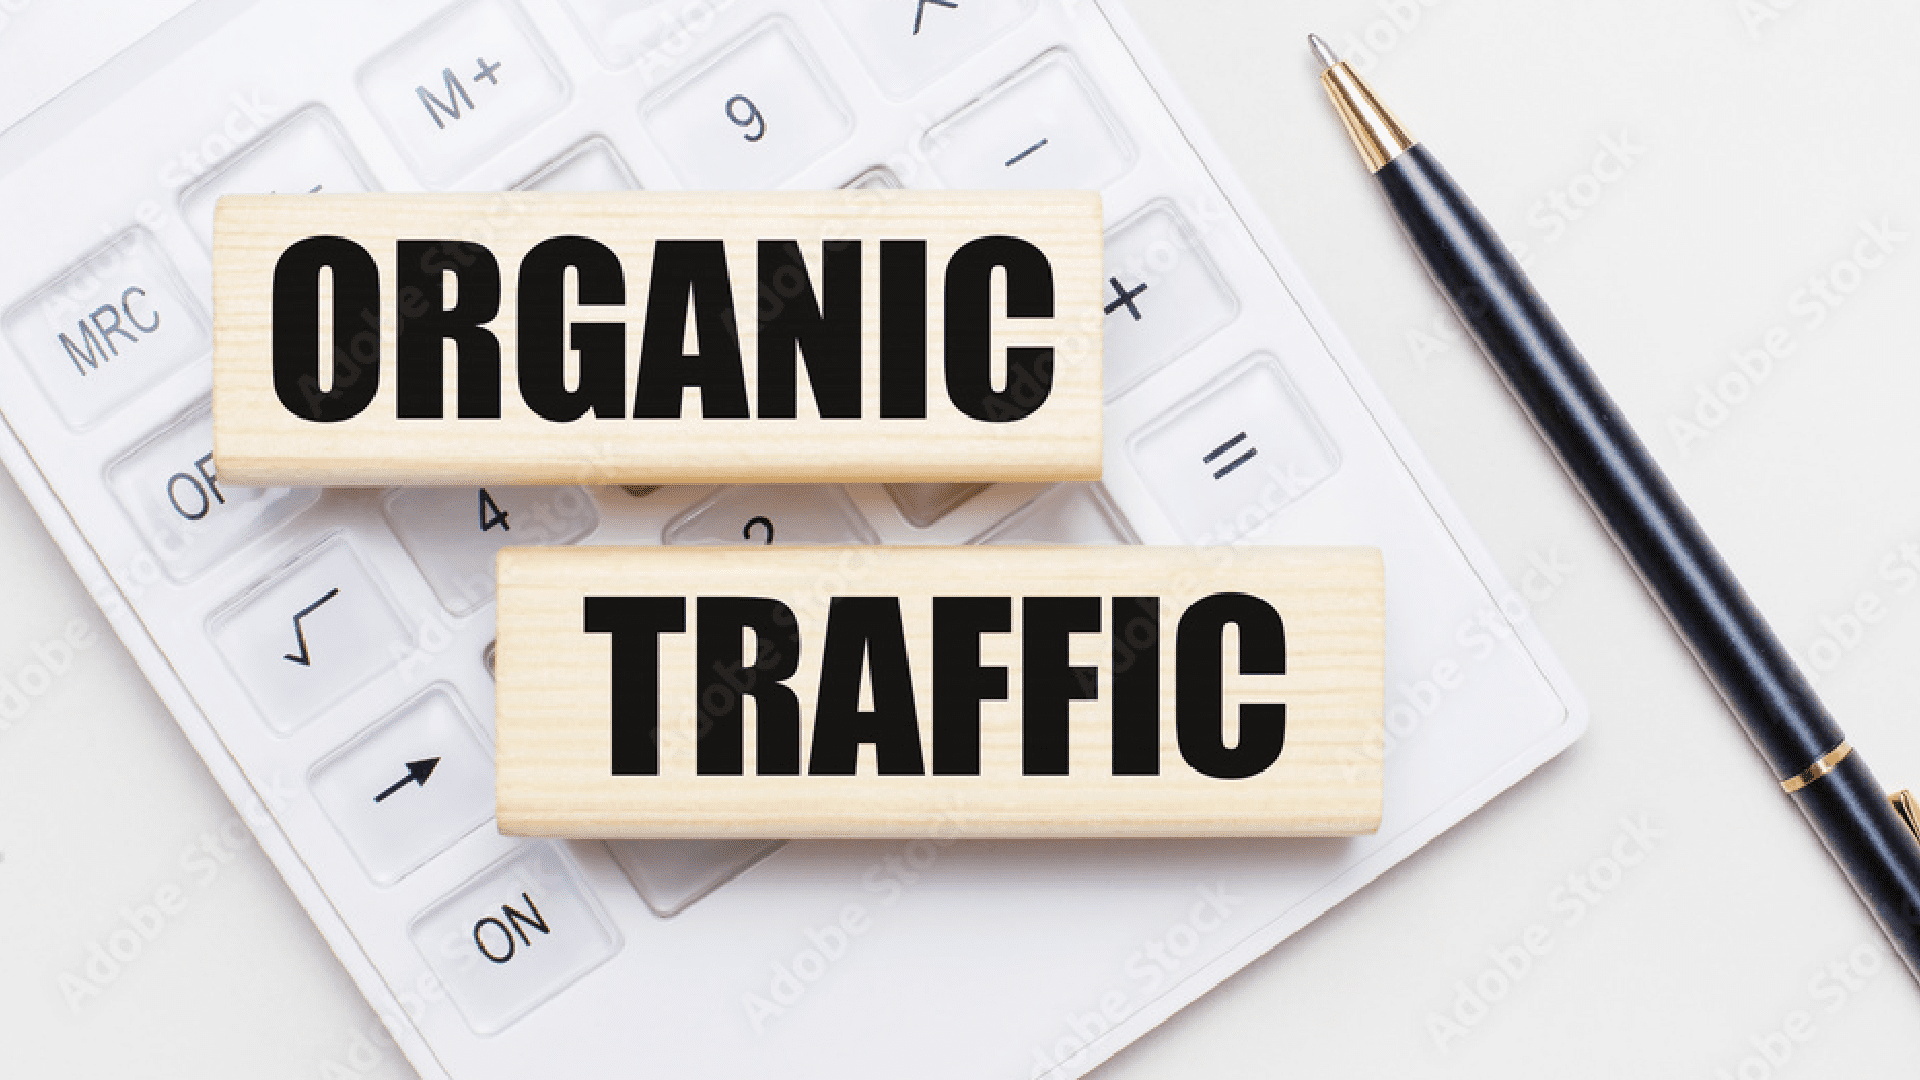 how to generate organic traffic using edtech marketing